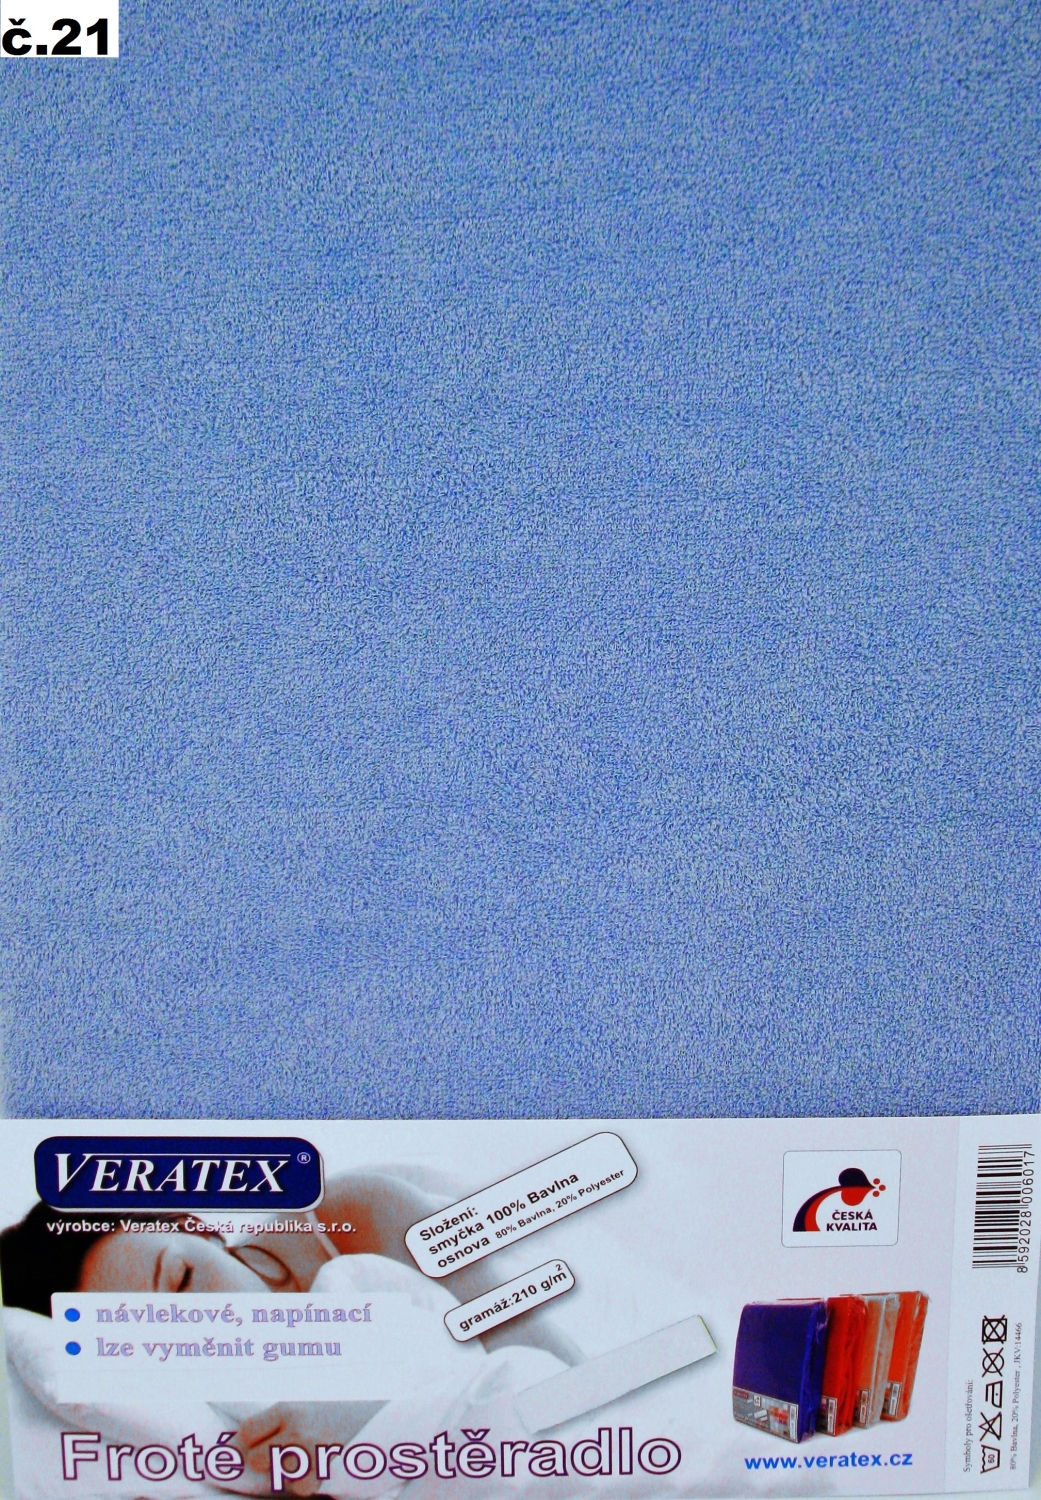 Veratex Froté prostěradlo postýlka 70x160/15 cm (č.21-sv.modrá)